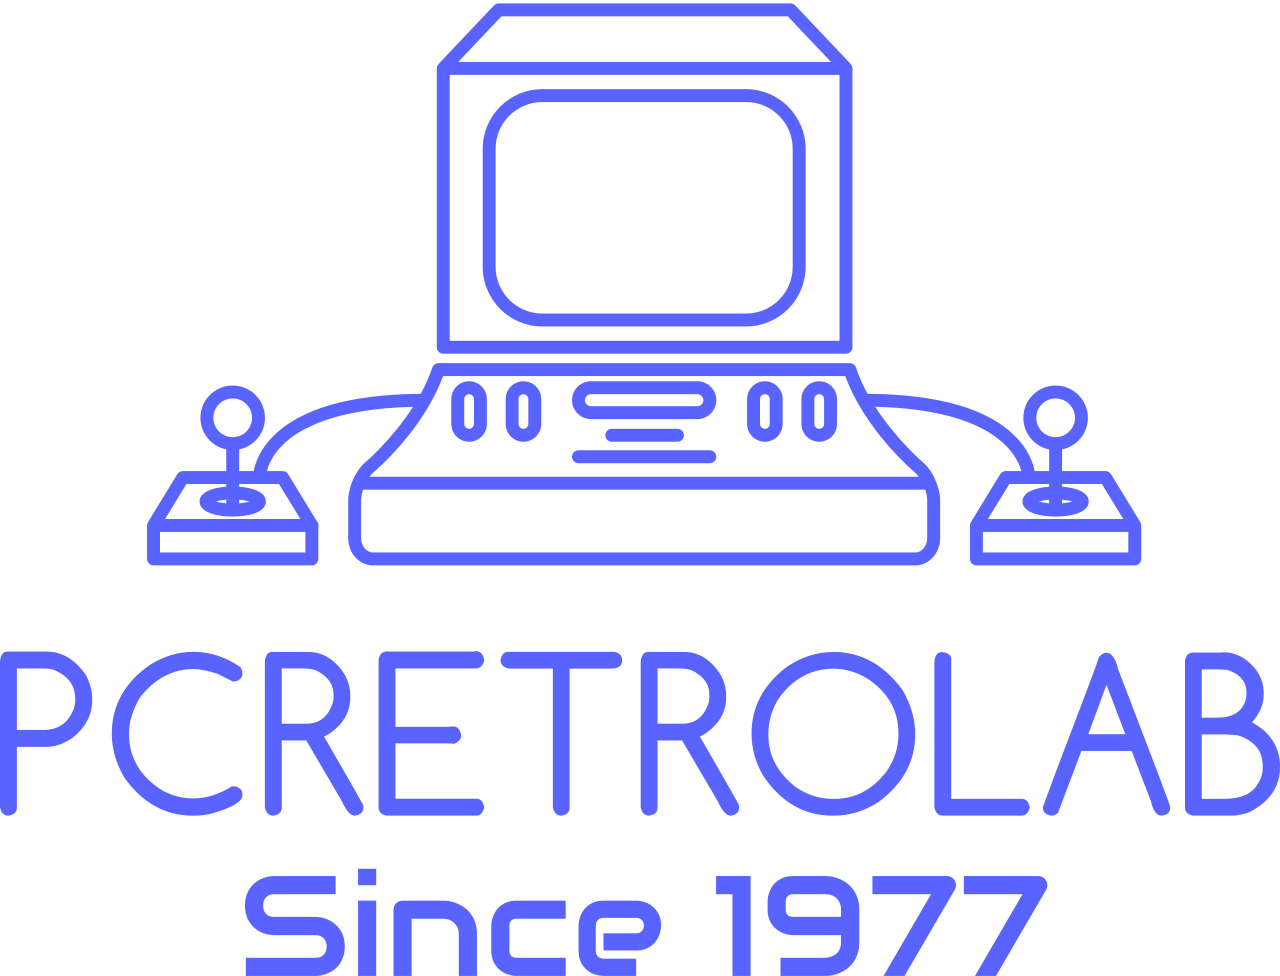 PCRETROLAB's web page